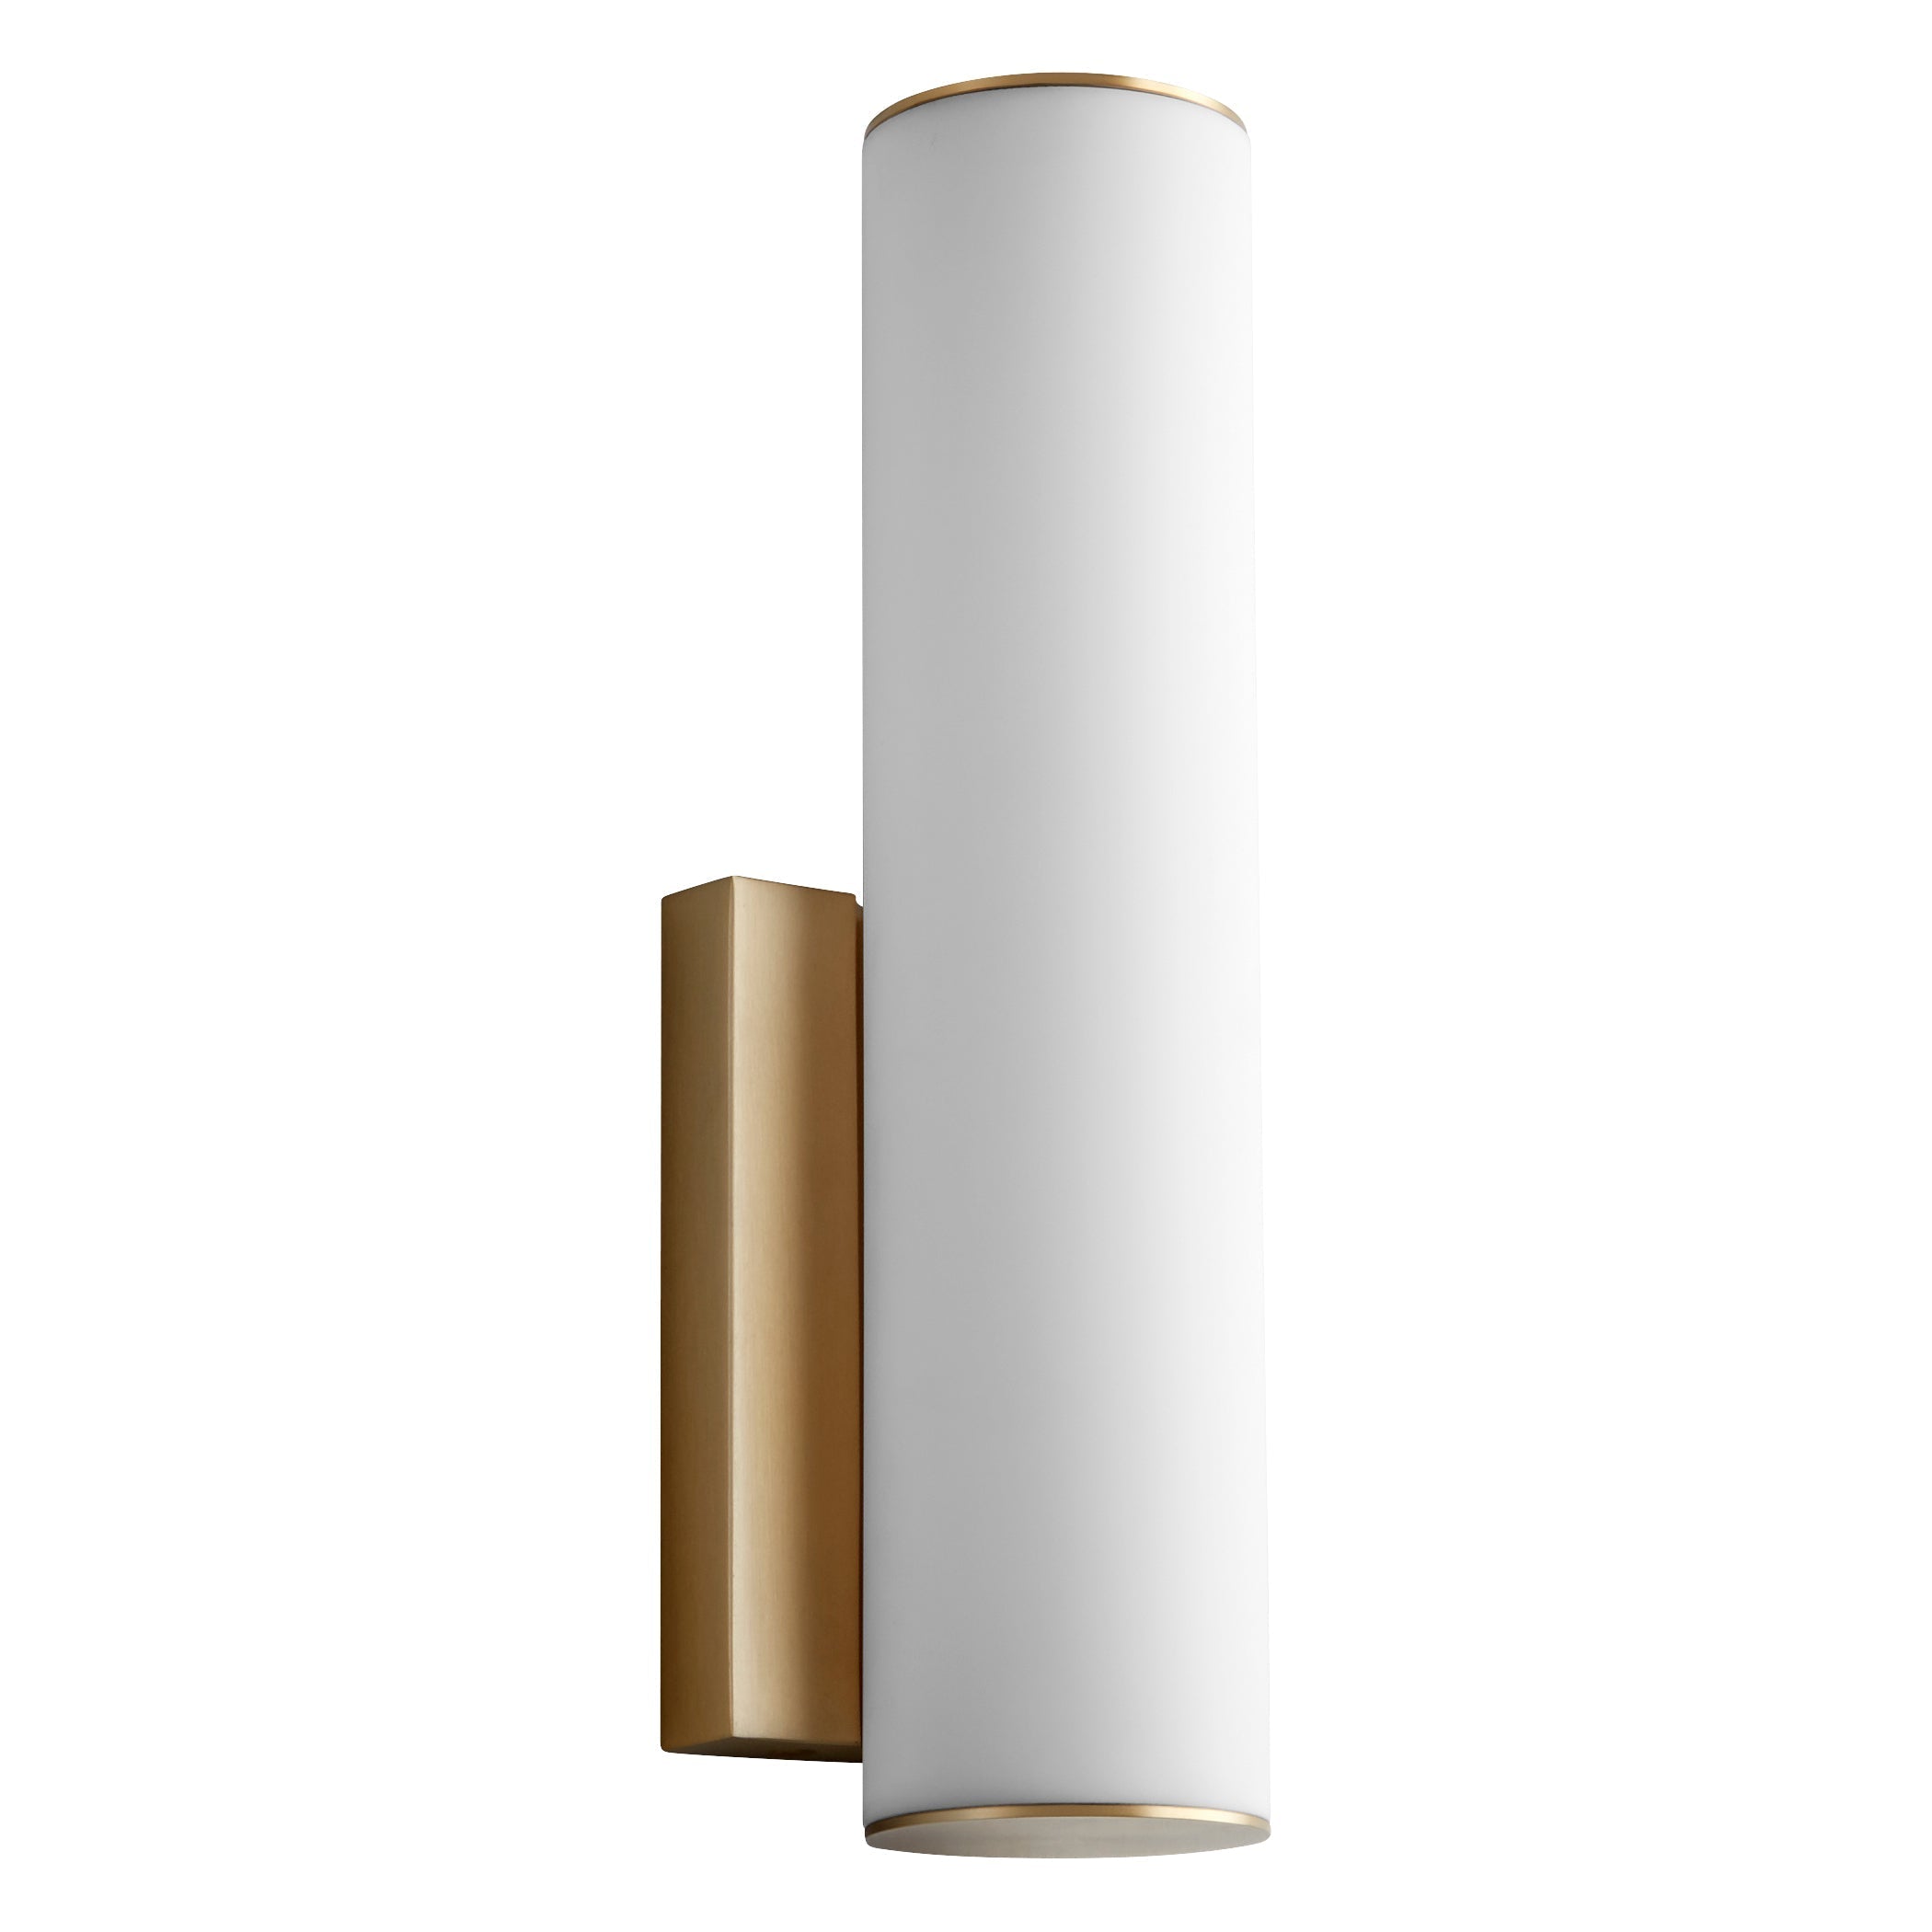 Oxygen Fugit 3-5010-40 Cylinder Wall Sconce Light 12 Inch, 3000K - Aged Brass